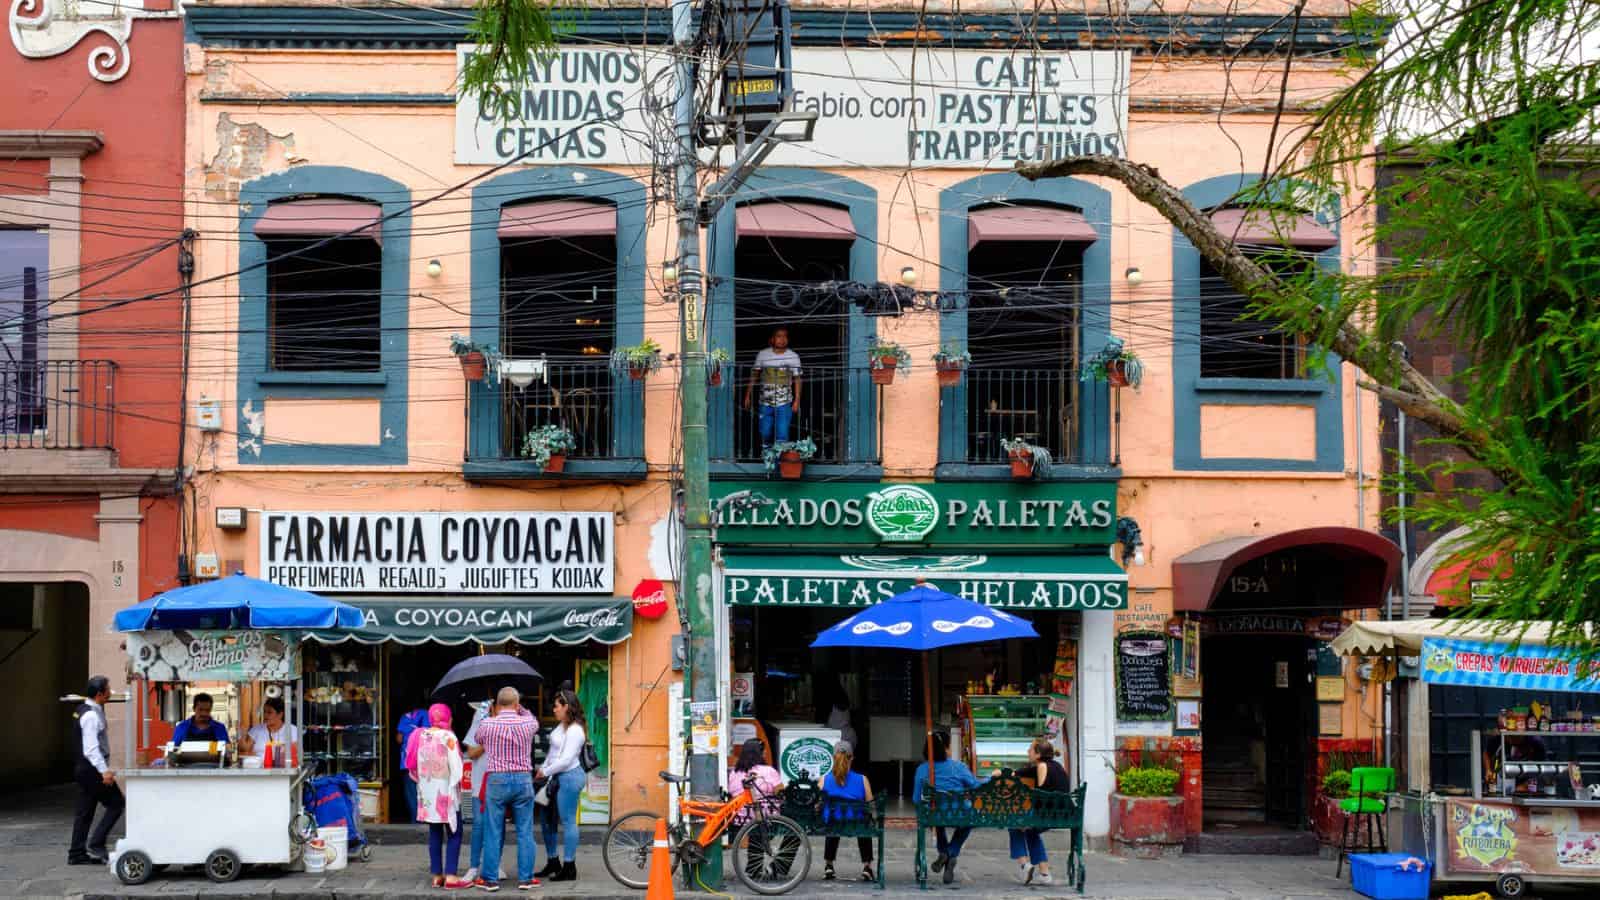 Restaurants in Mexico City